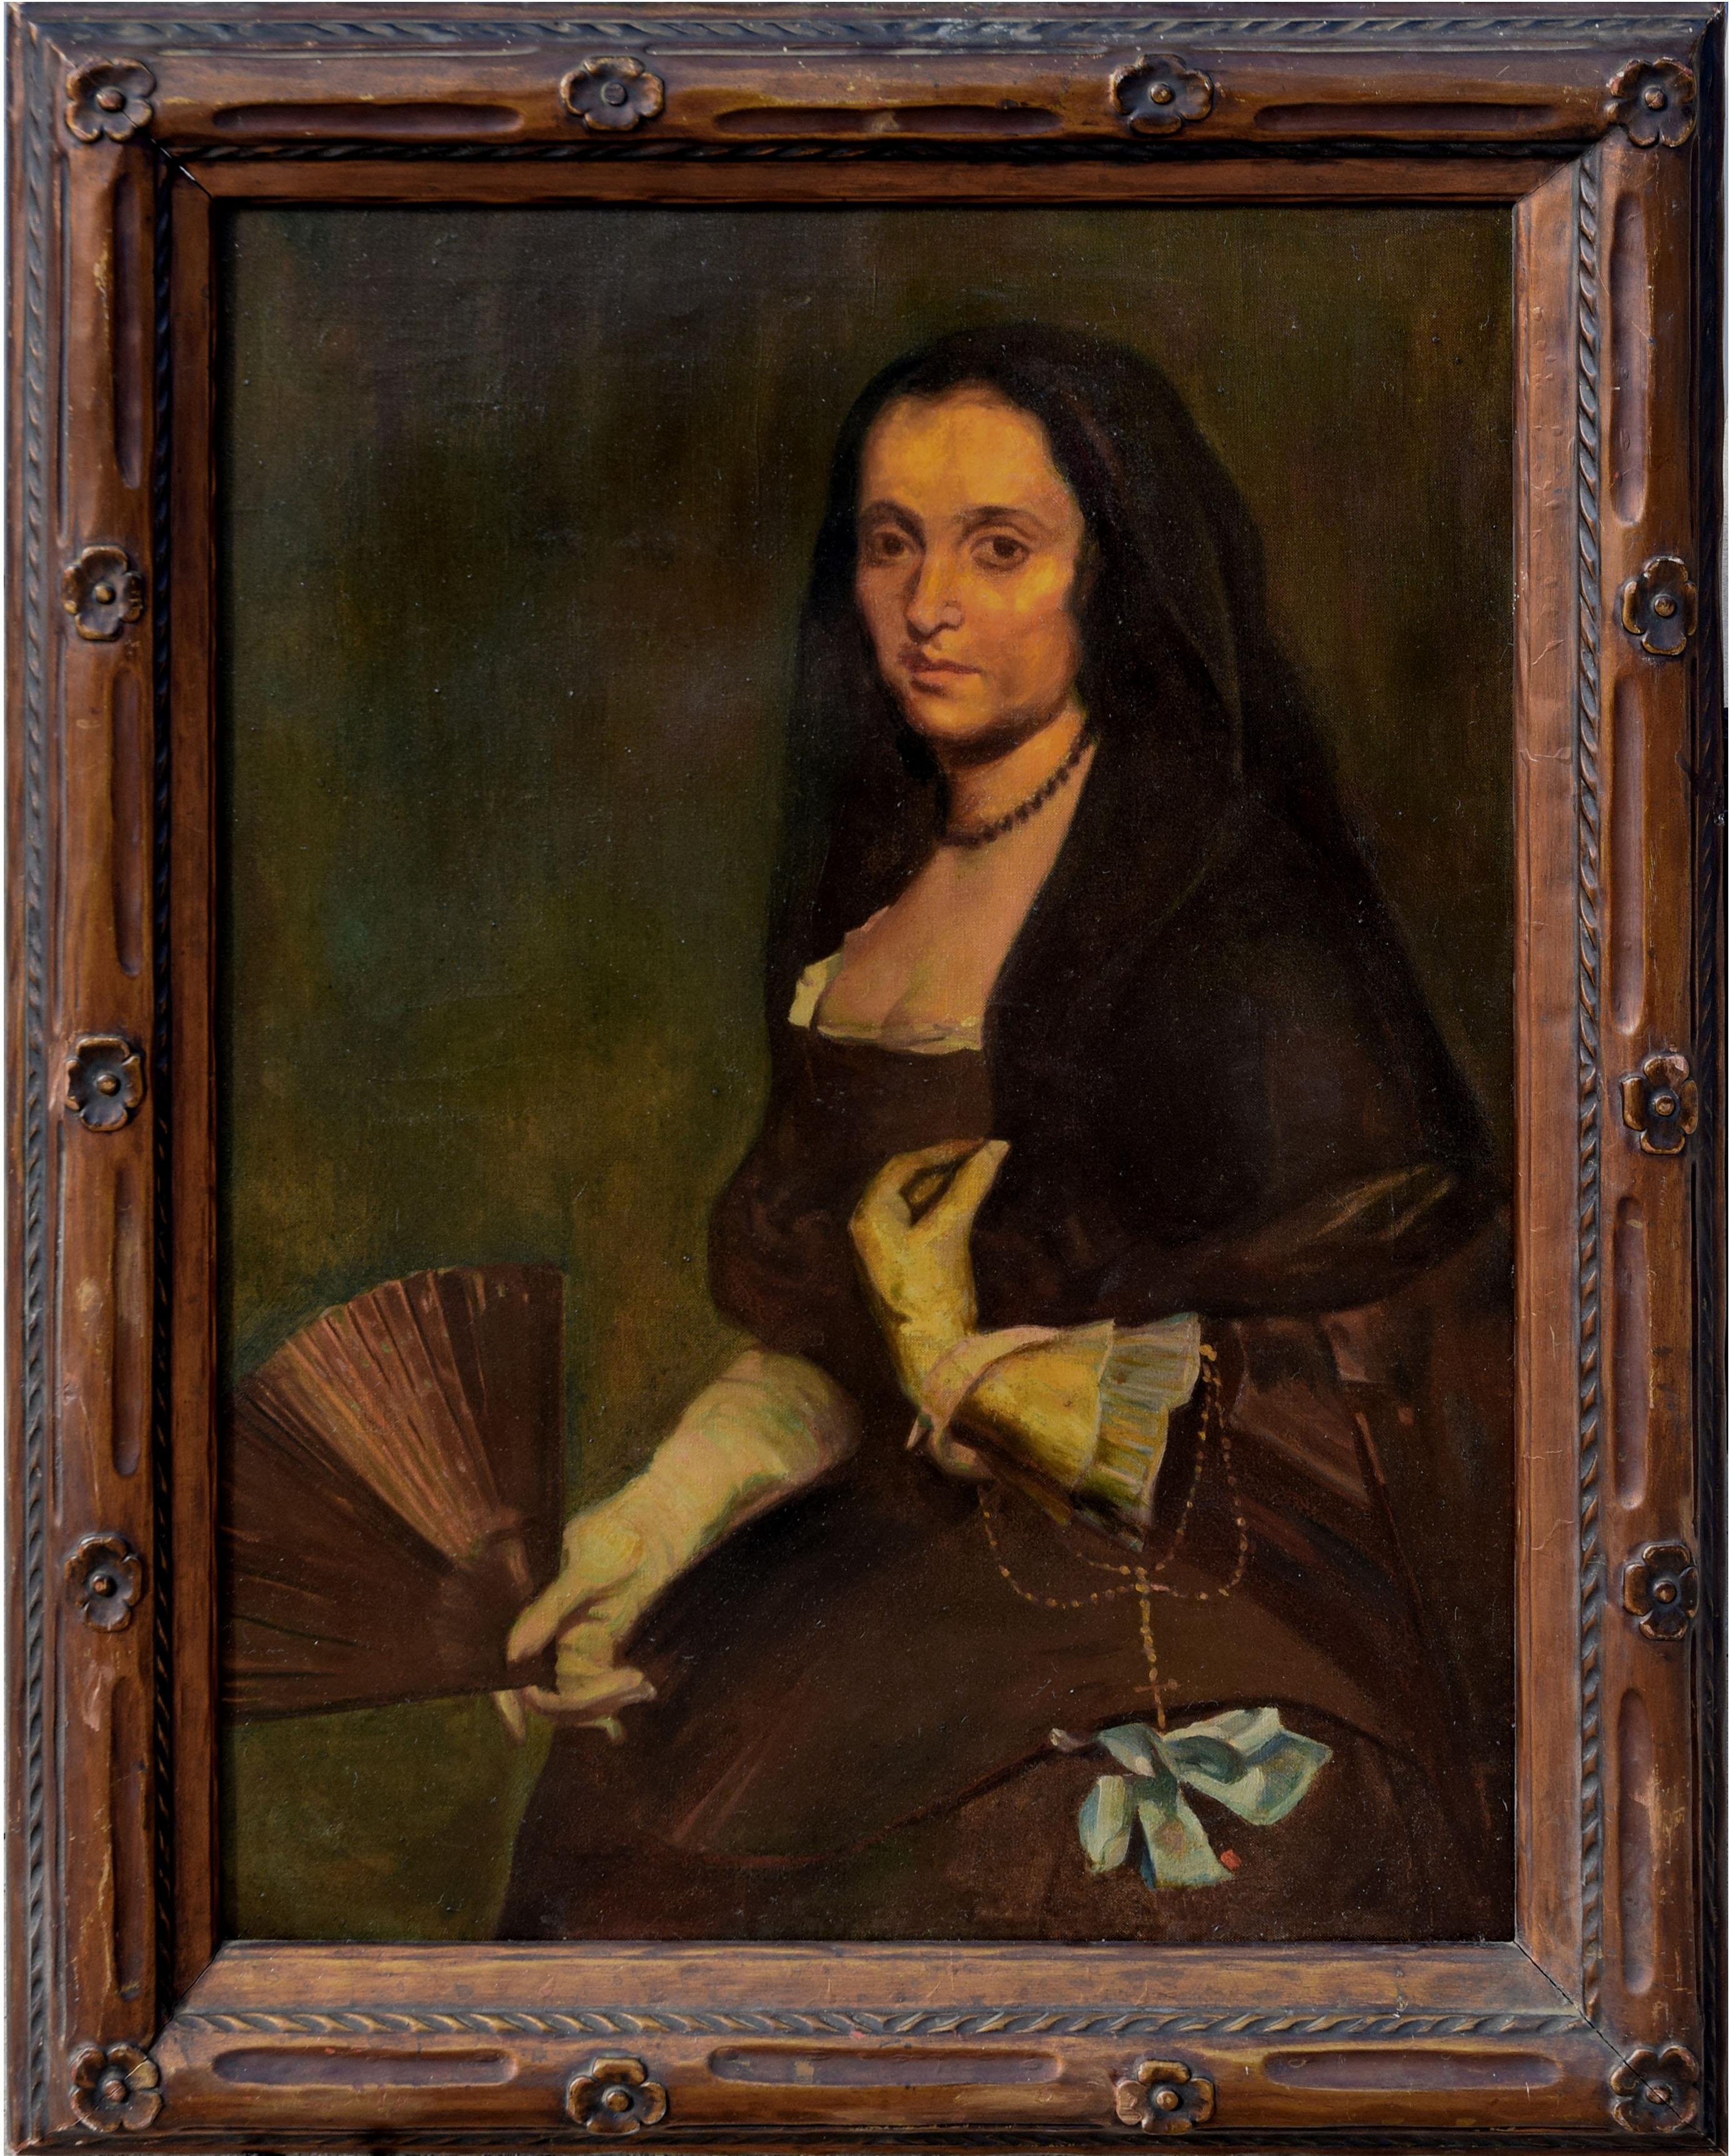 Unknown Portrait Painting - Study of Diego Valasquez's Lady with a Fan Portrait